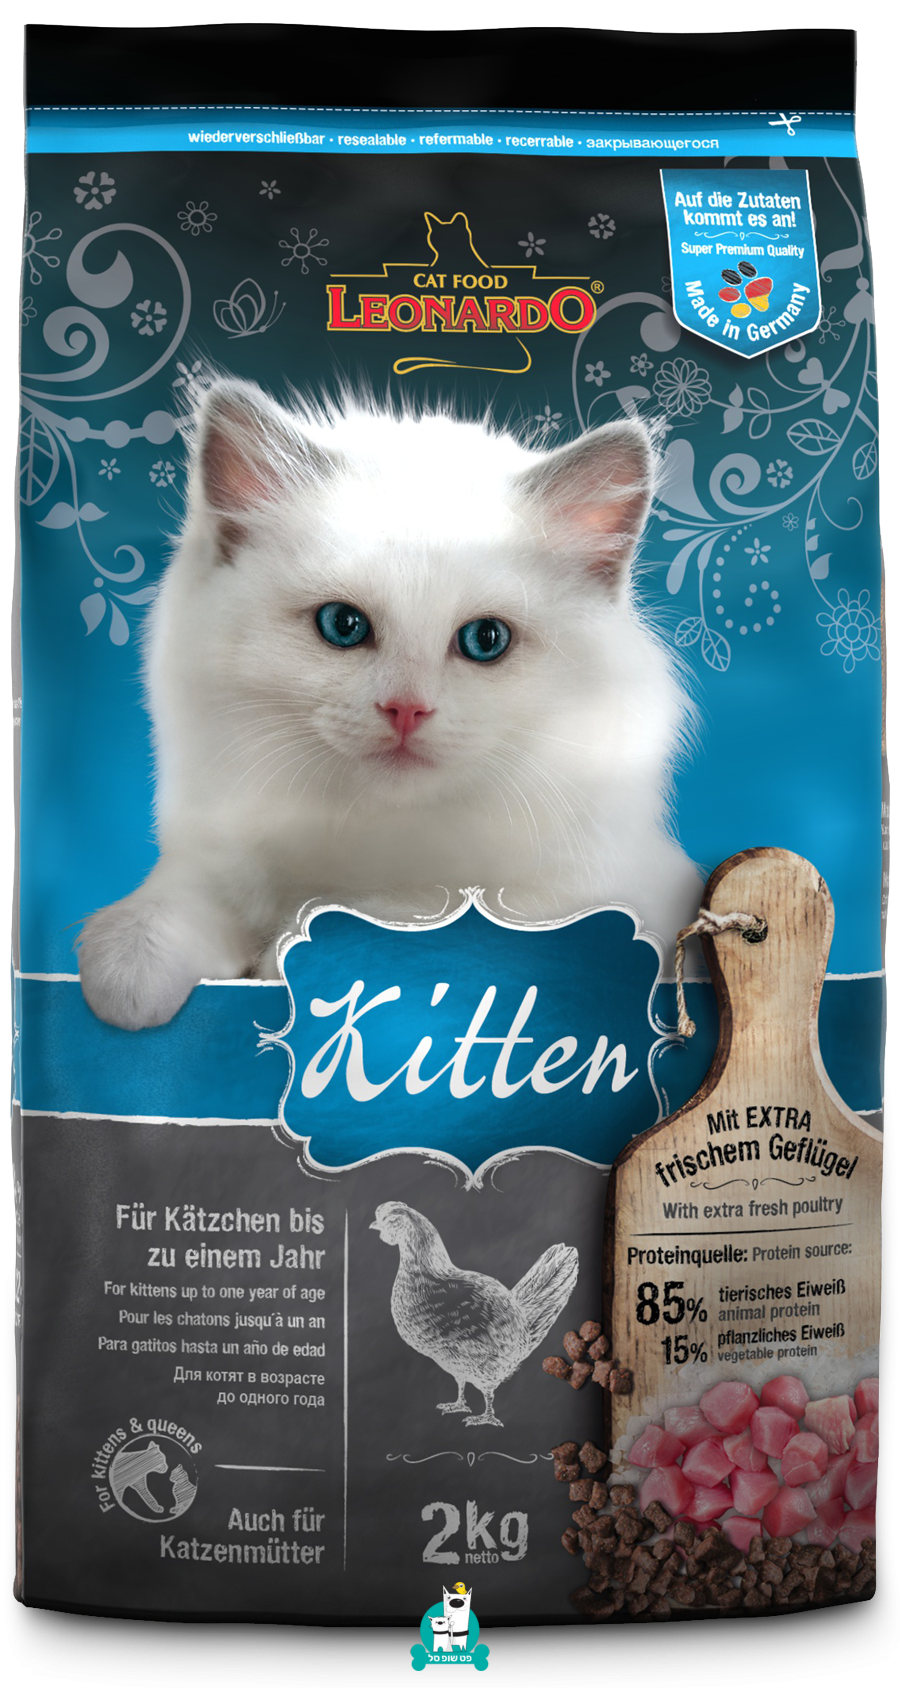 Leonardo Kitten 2kg מזון לחתולים לאונרדו מבצע פטשופסל גורים